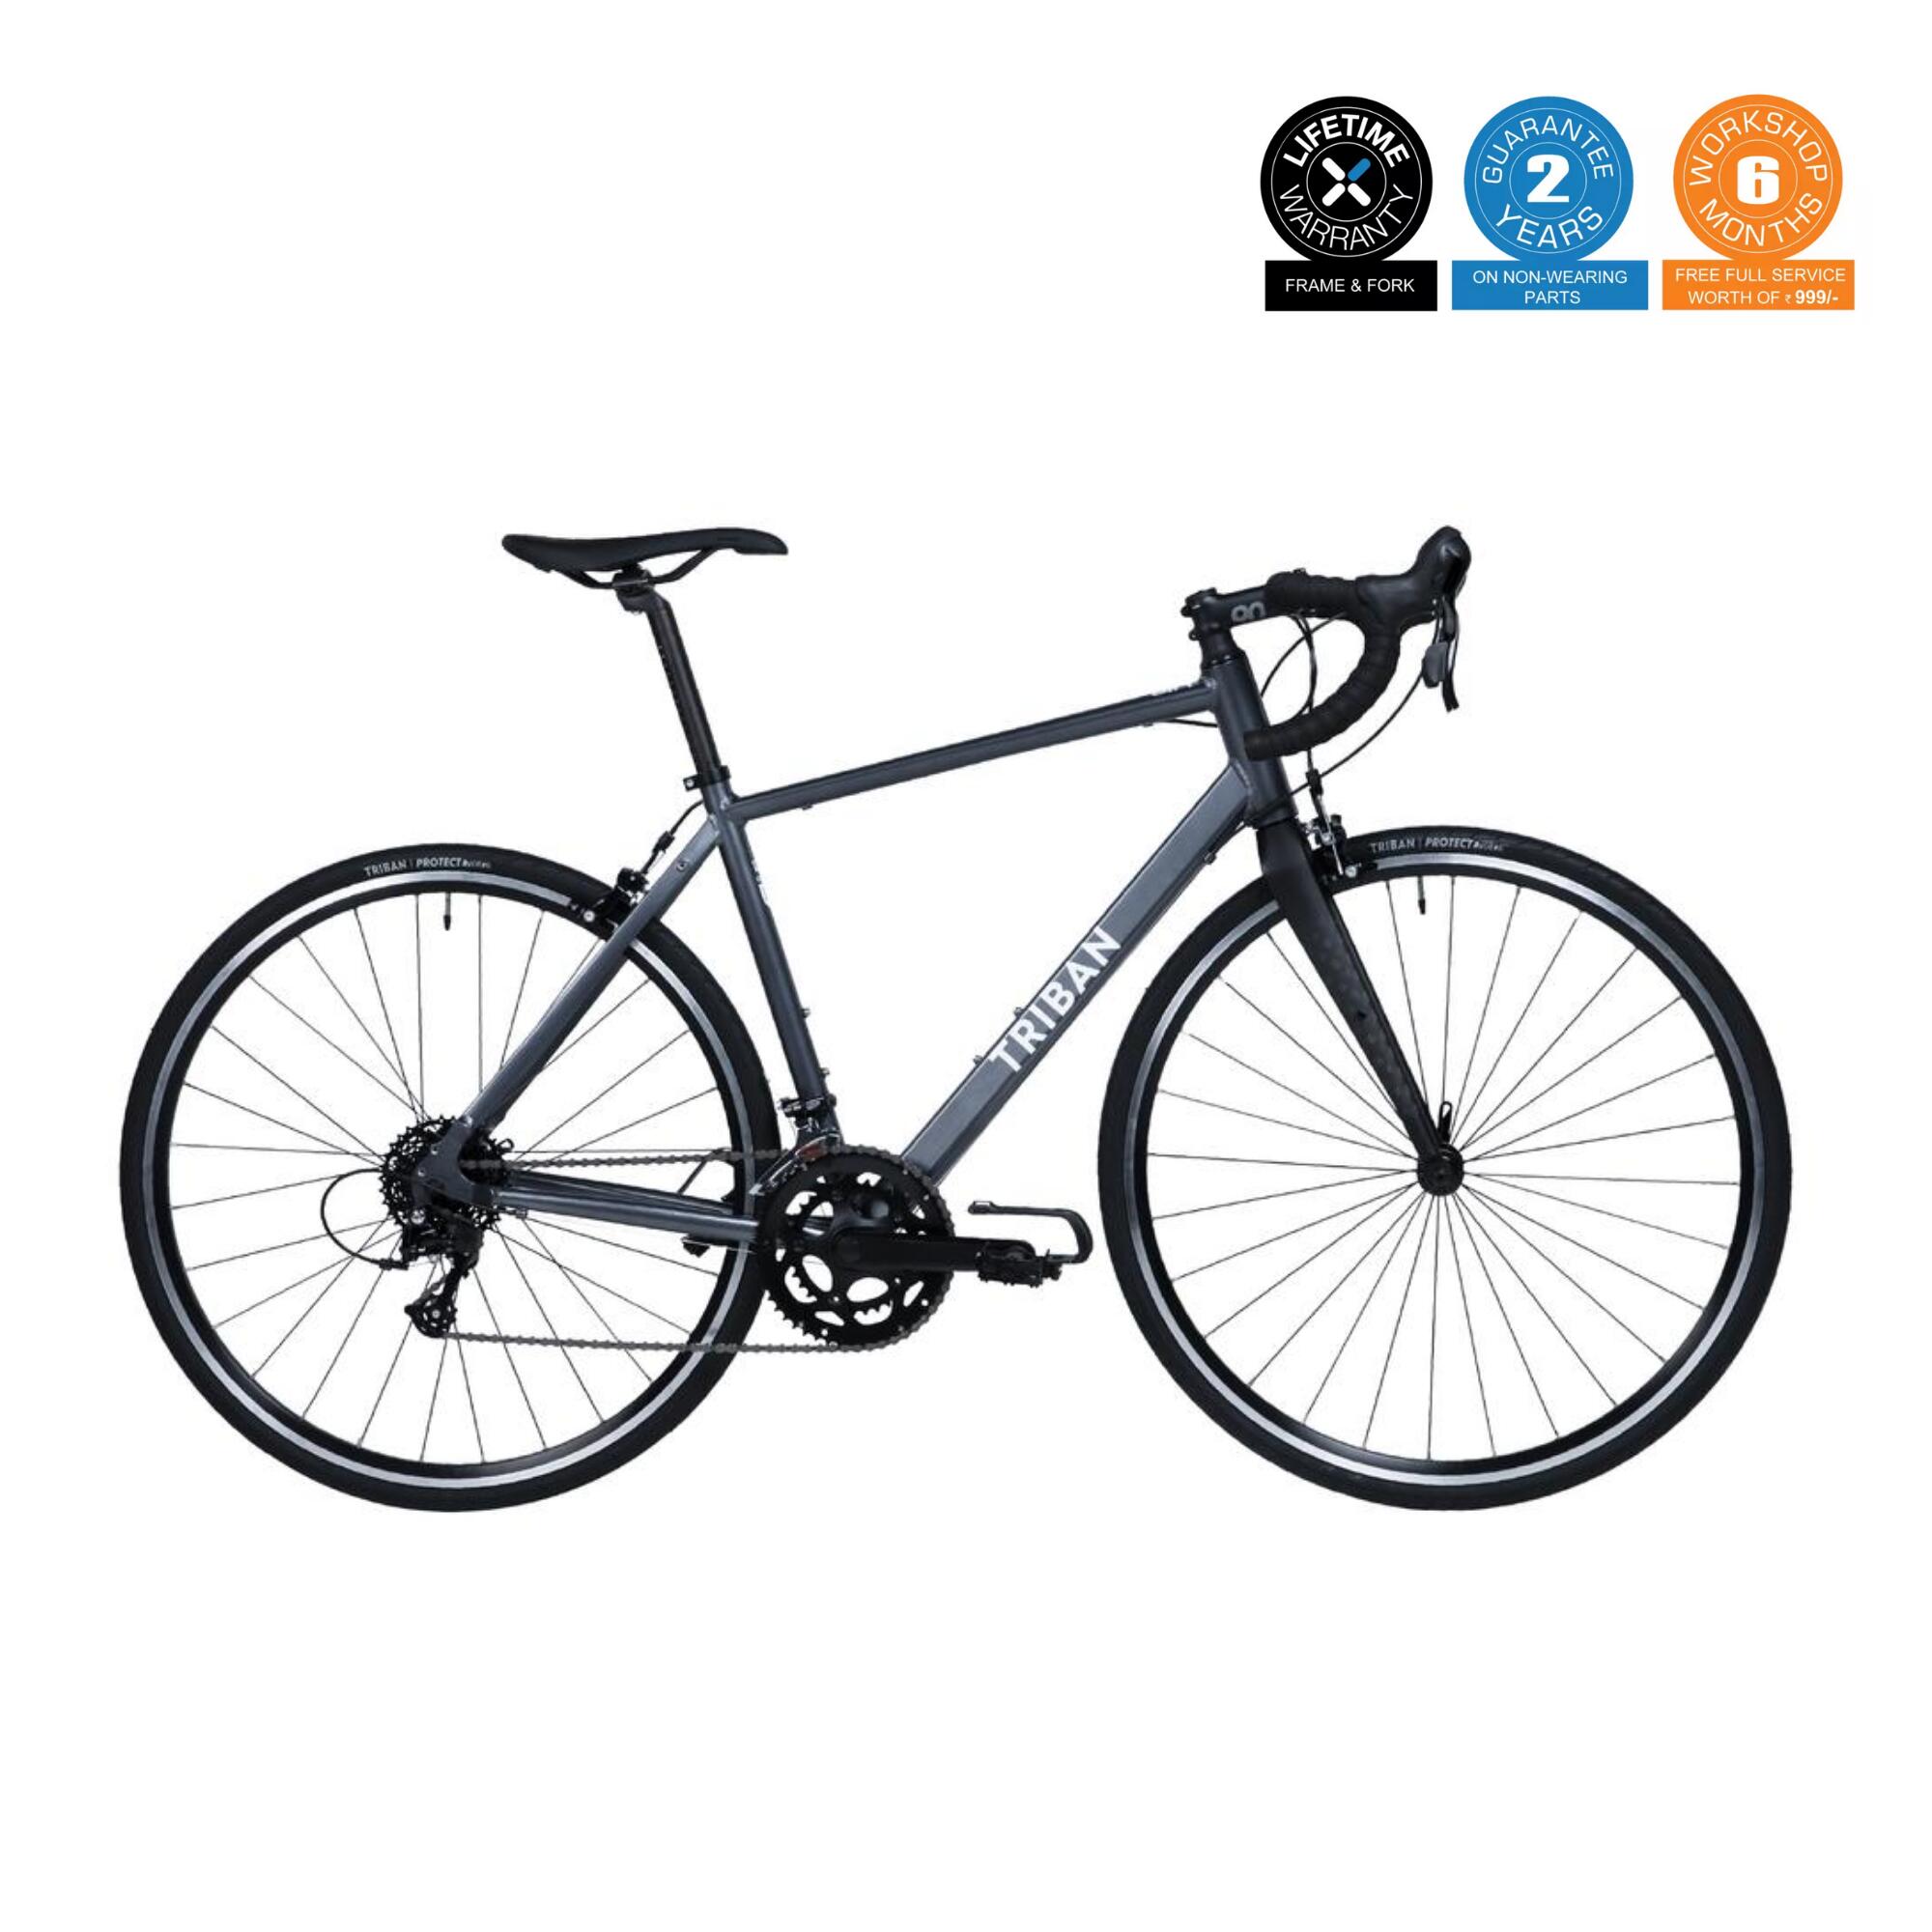 24 inch wheel size bike height